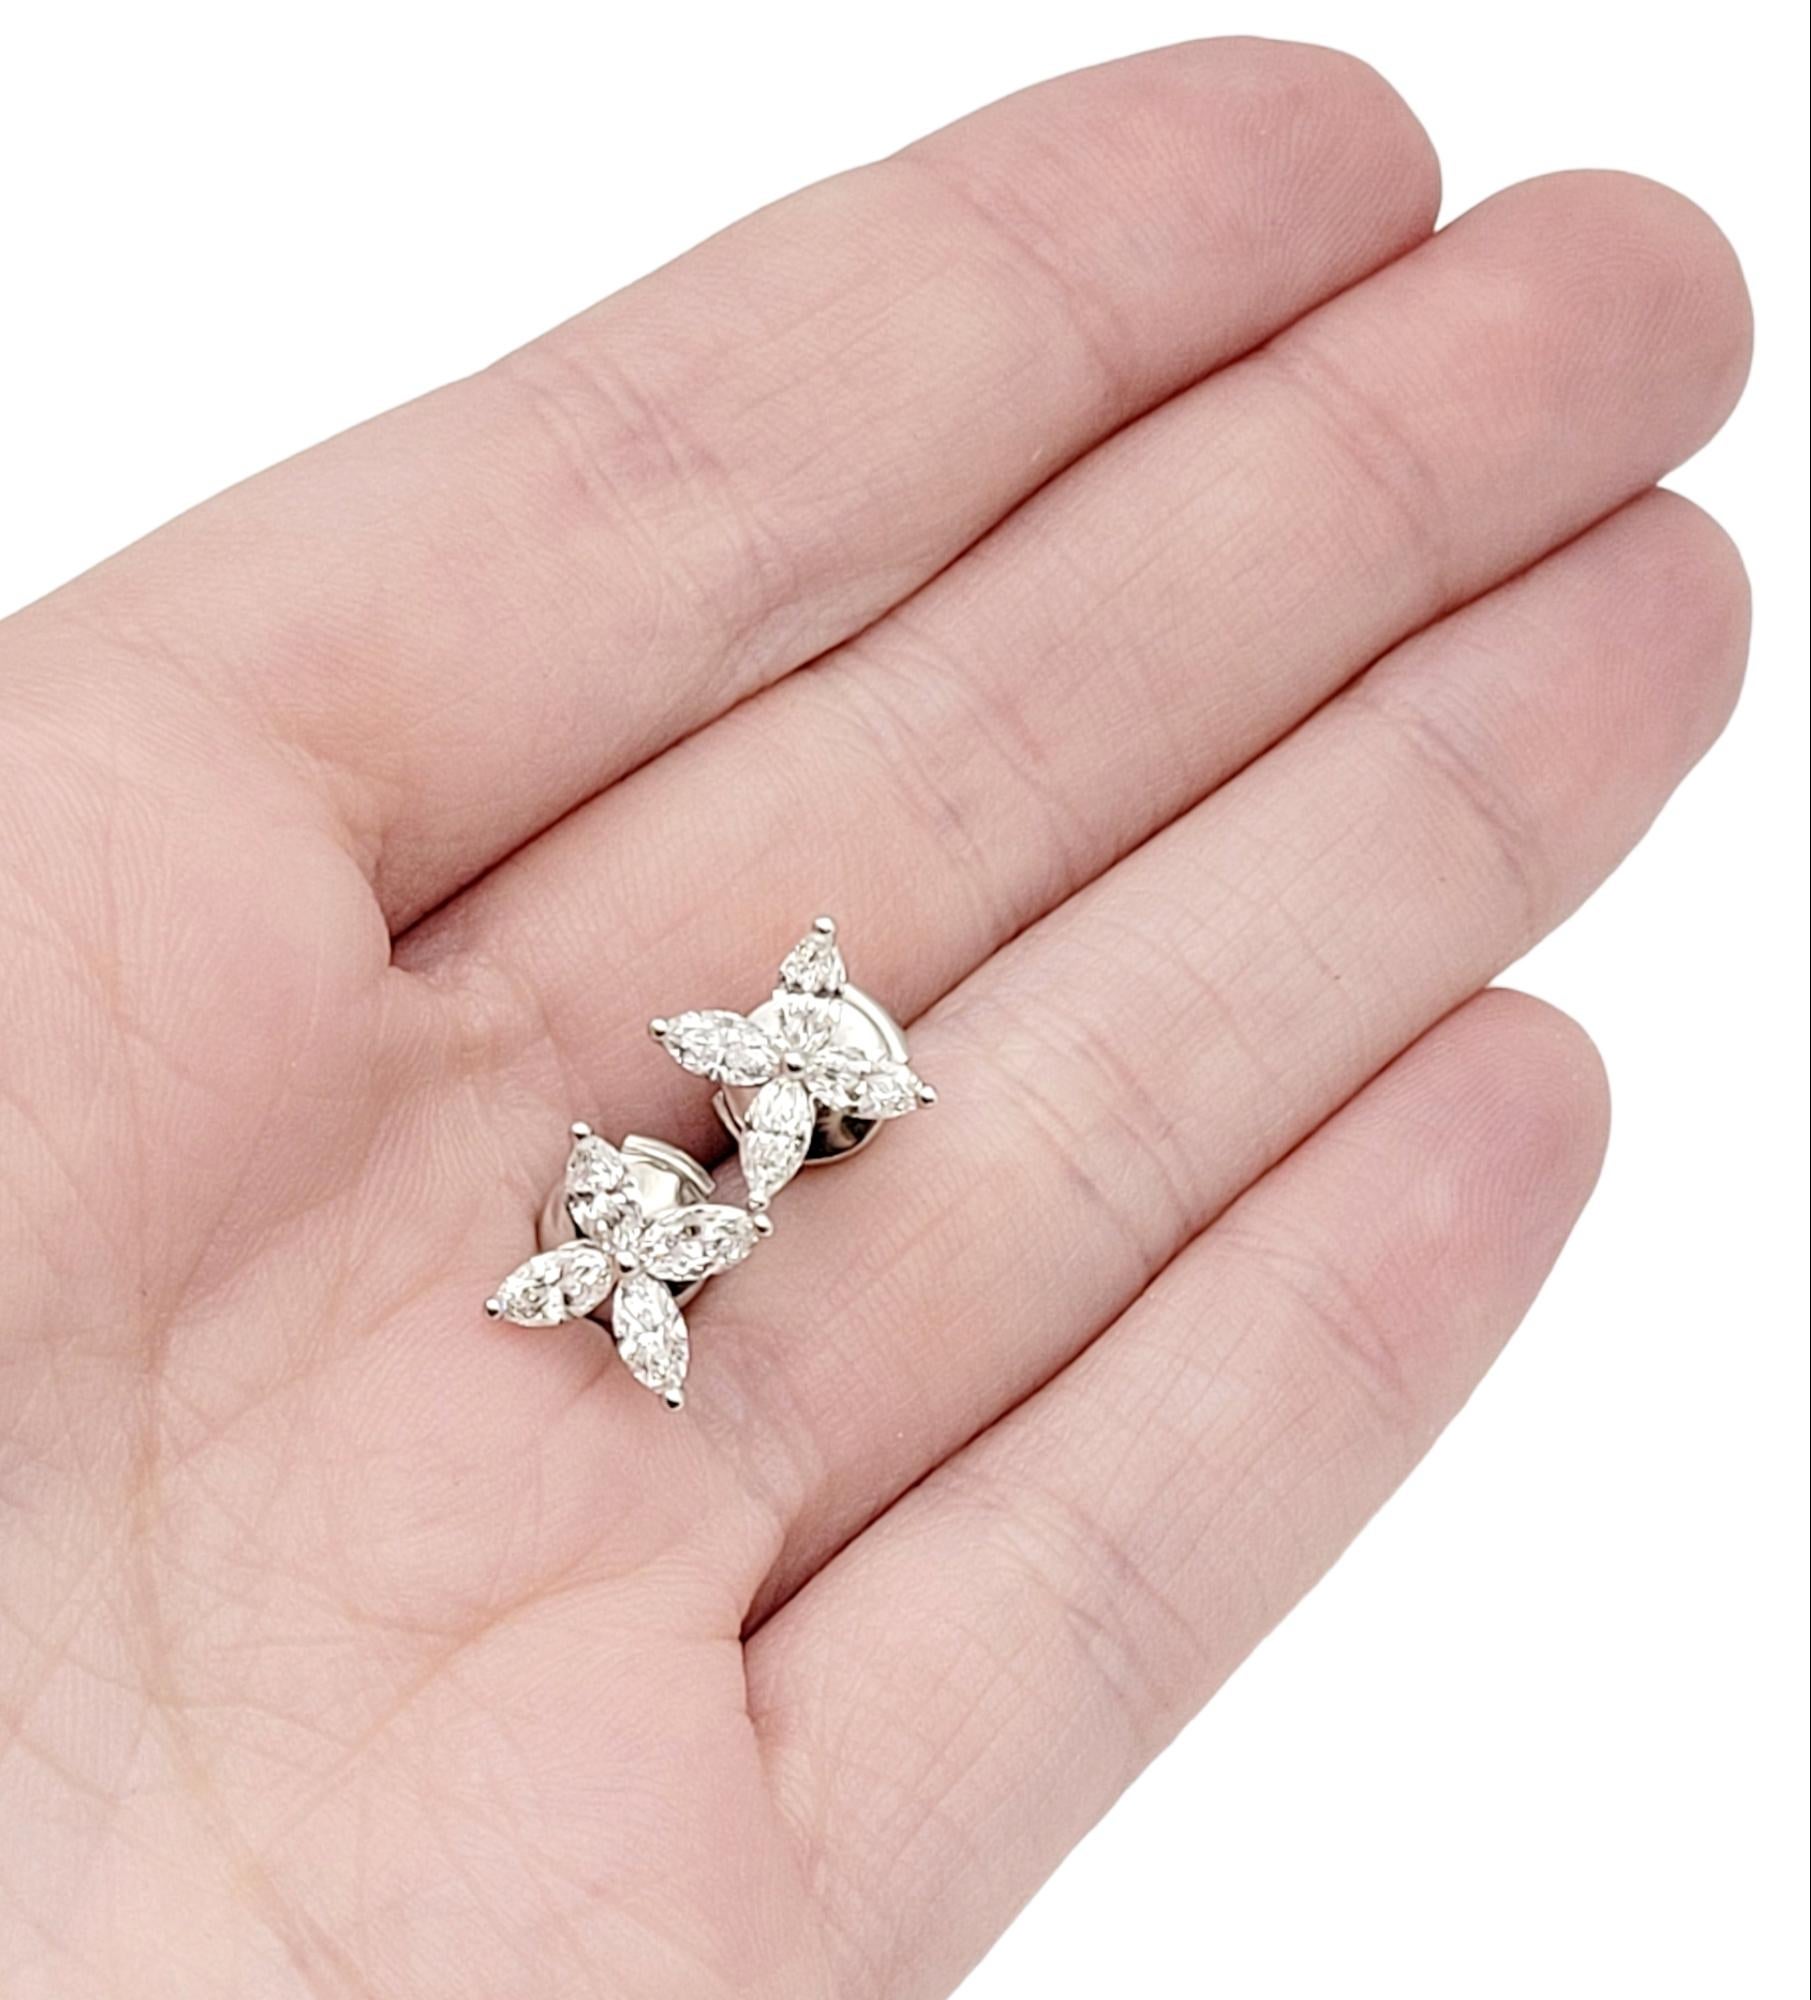 Tiffany & Co. Victoria Medium .92 Carats Diamond Stud Earrings in Platinum 4